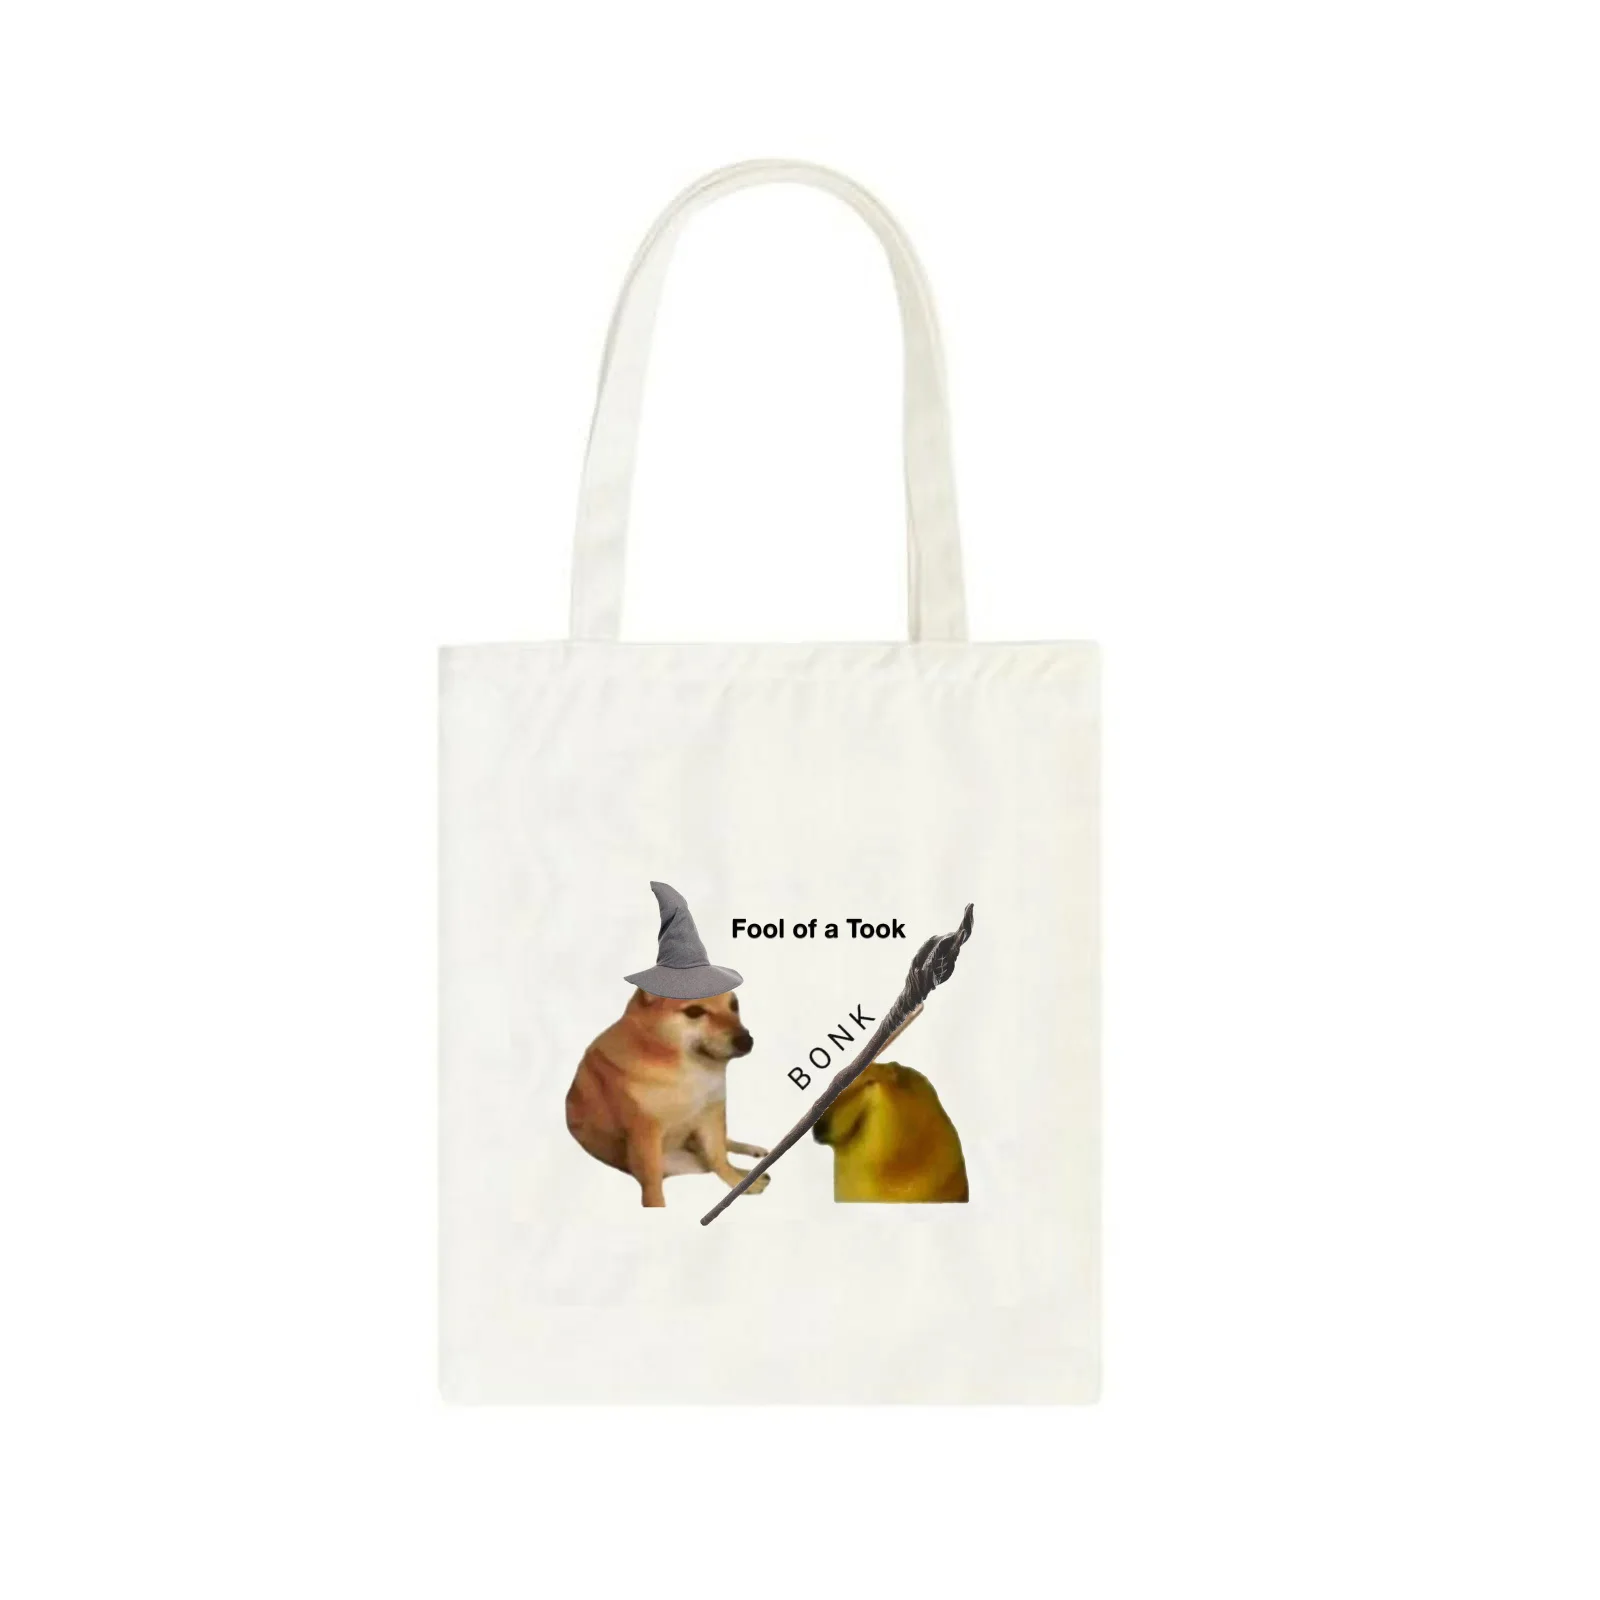 

Shopper Bag Fool of a took Pattern Tote Bag Shopping Unisex Fashion Travel Canvas Bag Pacakge Hand Bag White Beach Bag